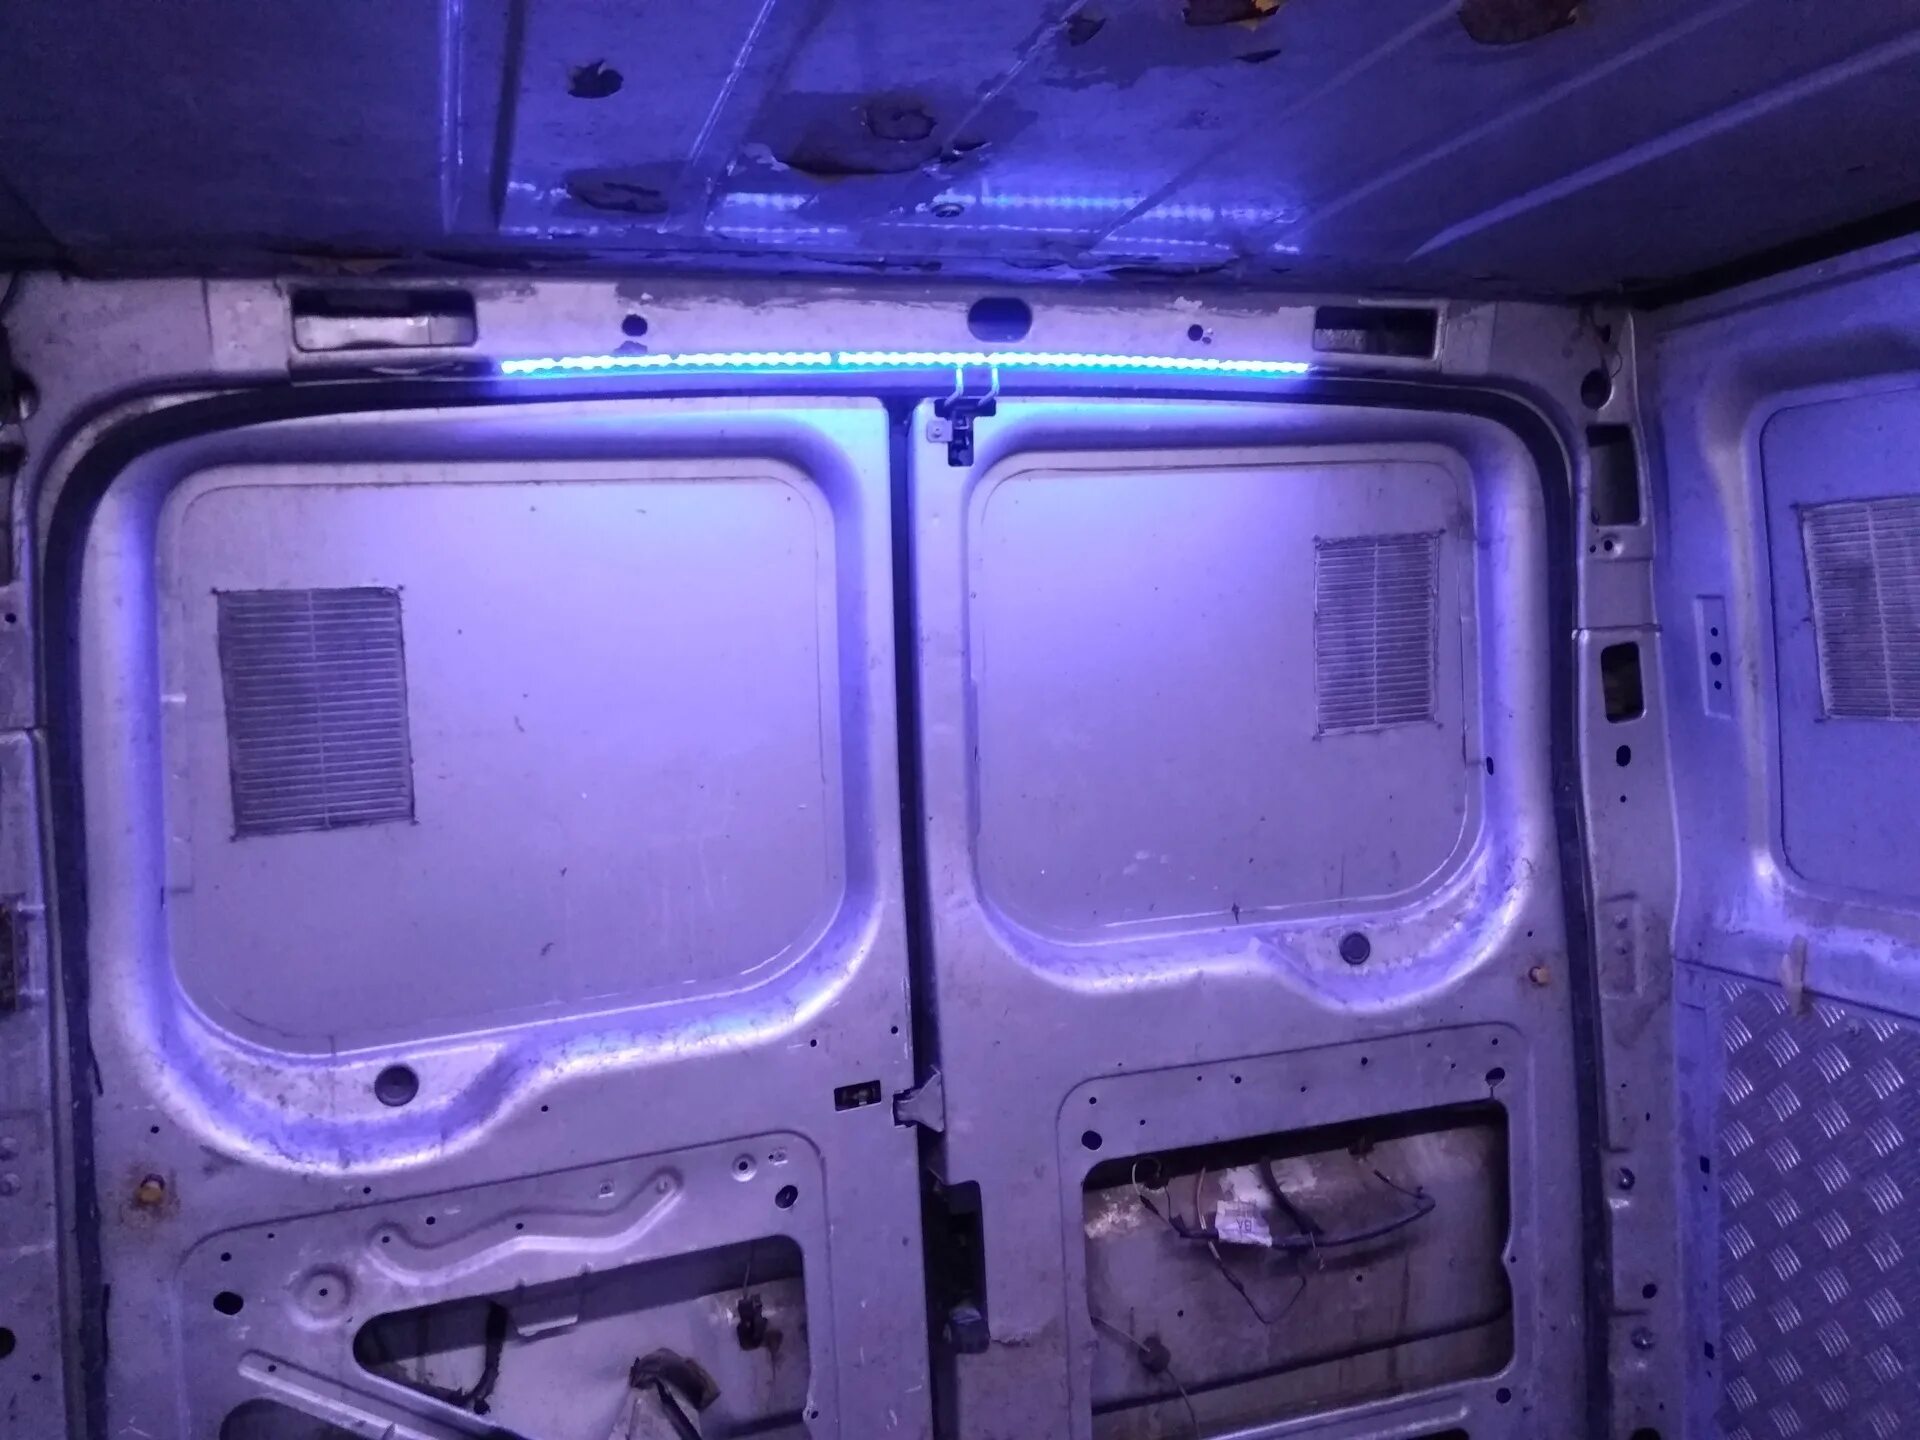 Шумоизоляция фургона Форд Транзит. Диодное освещение фургона Форд Транзит 2018. Фургон изнутри. Подсветка фургона внутри.